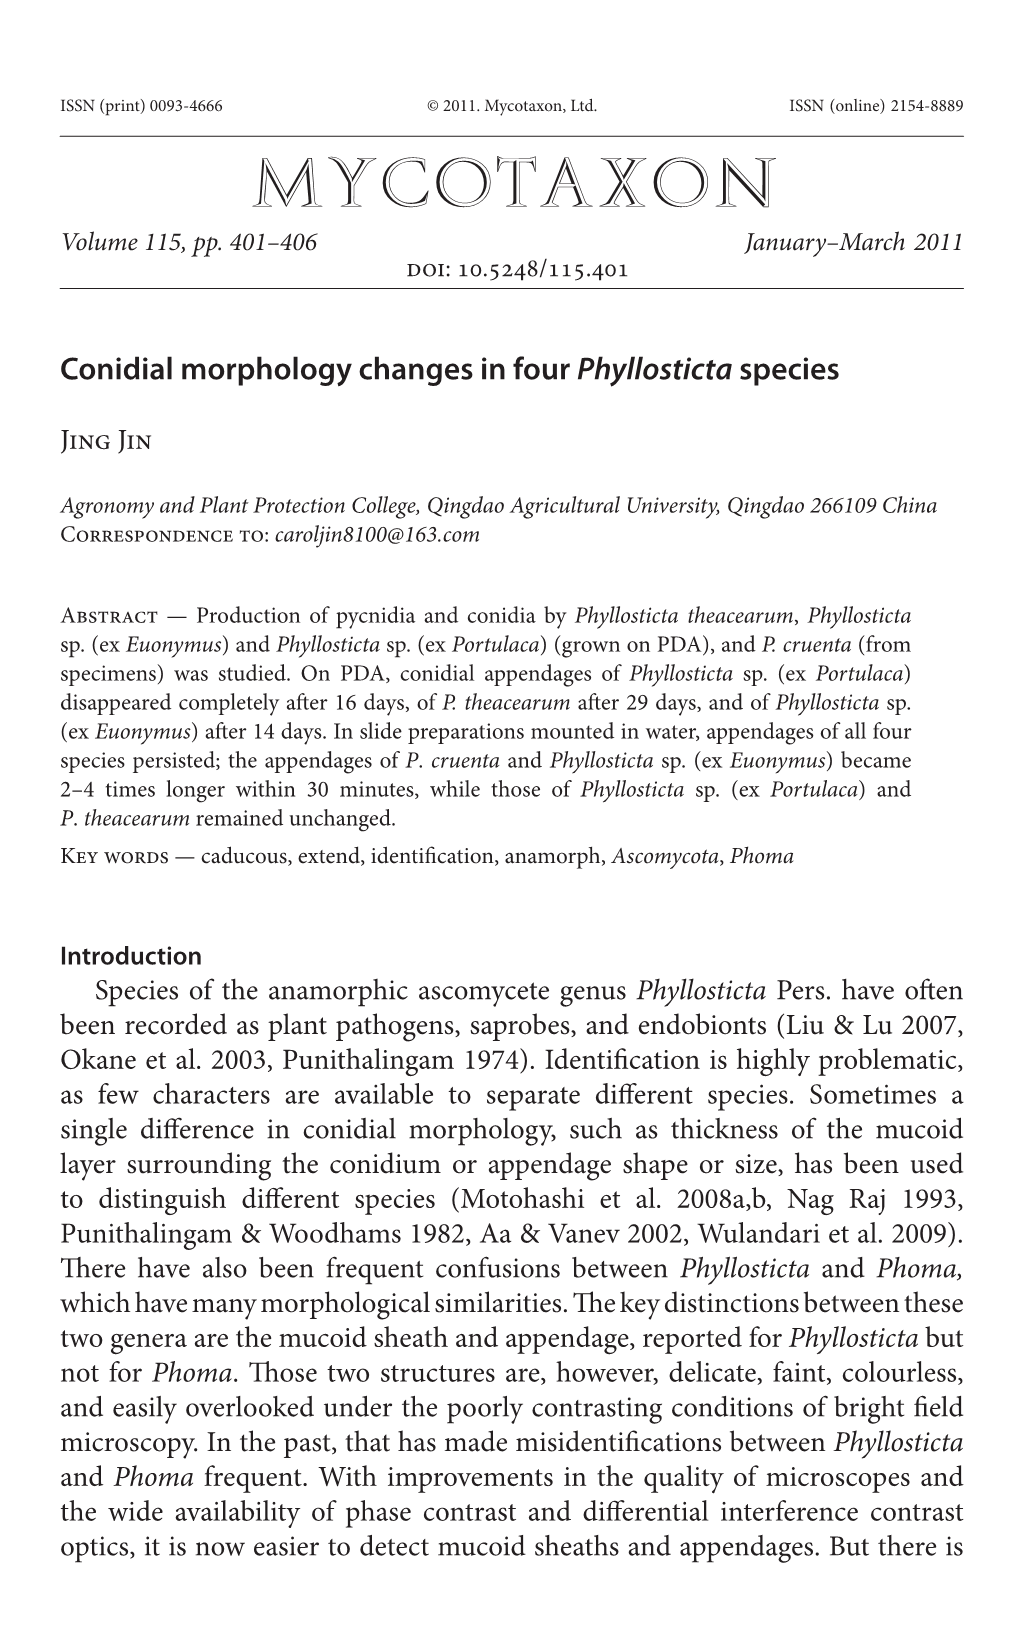 Conidial Morphology Changes in Four &lt;I&gt;Phyllosticta&lt;/I&gt;